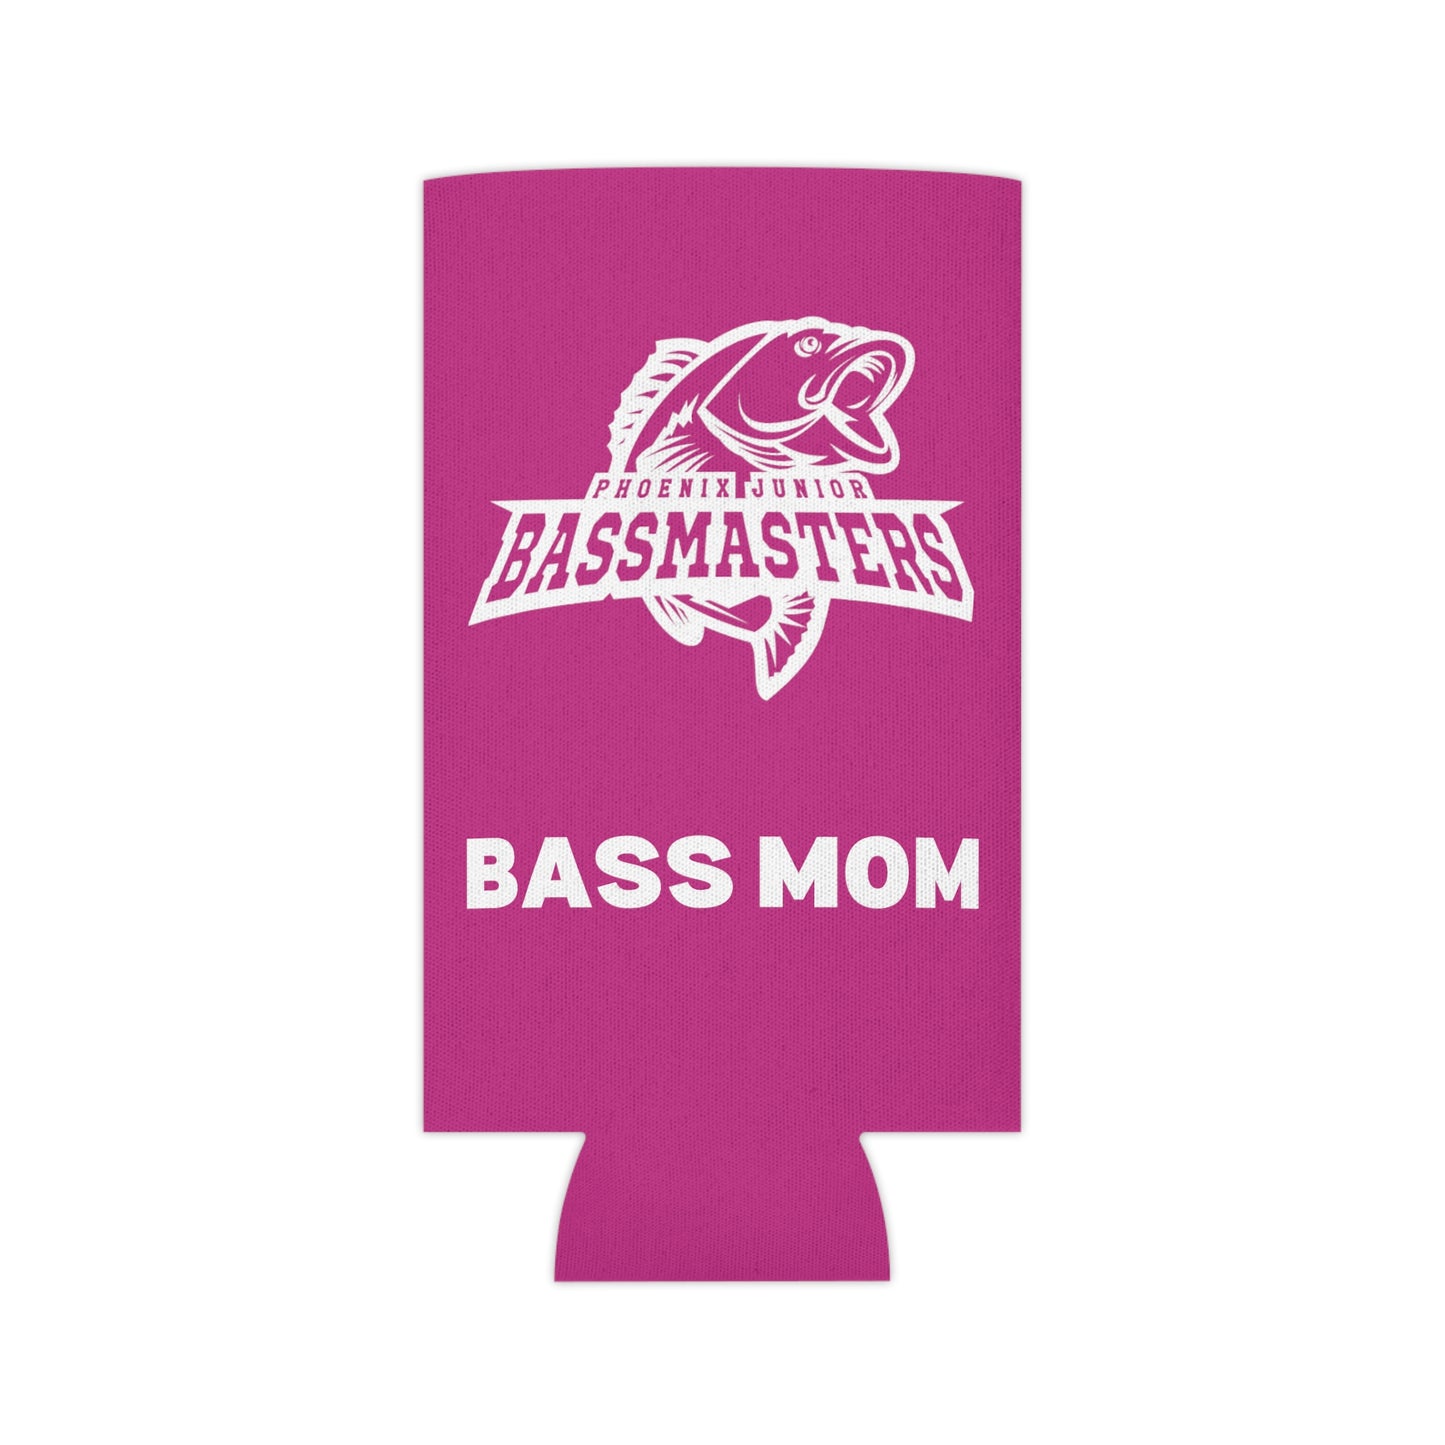 Junior Bassmasters - BASS MOM - Can Cooler